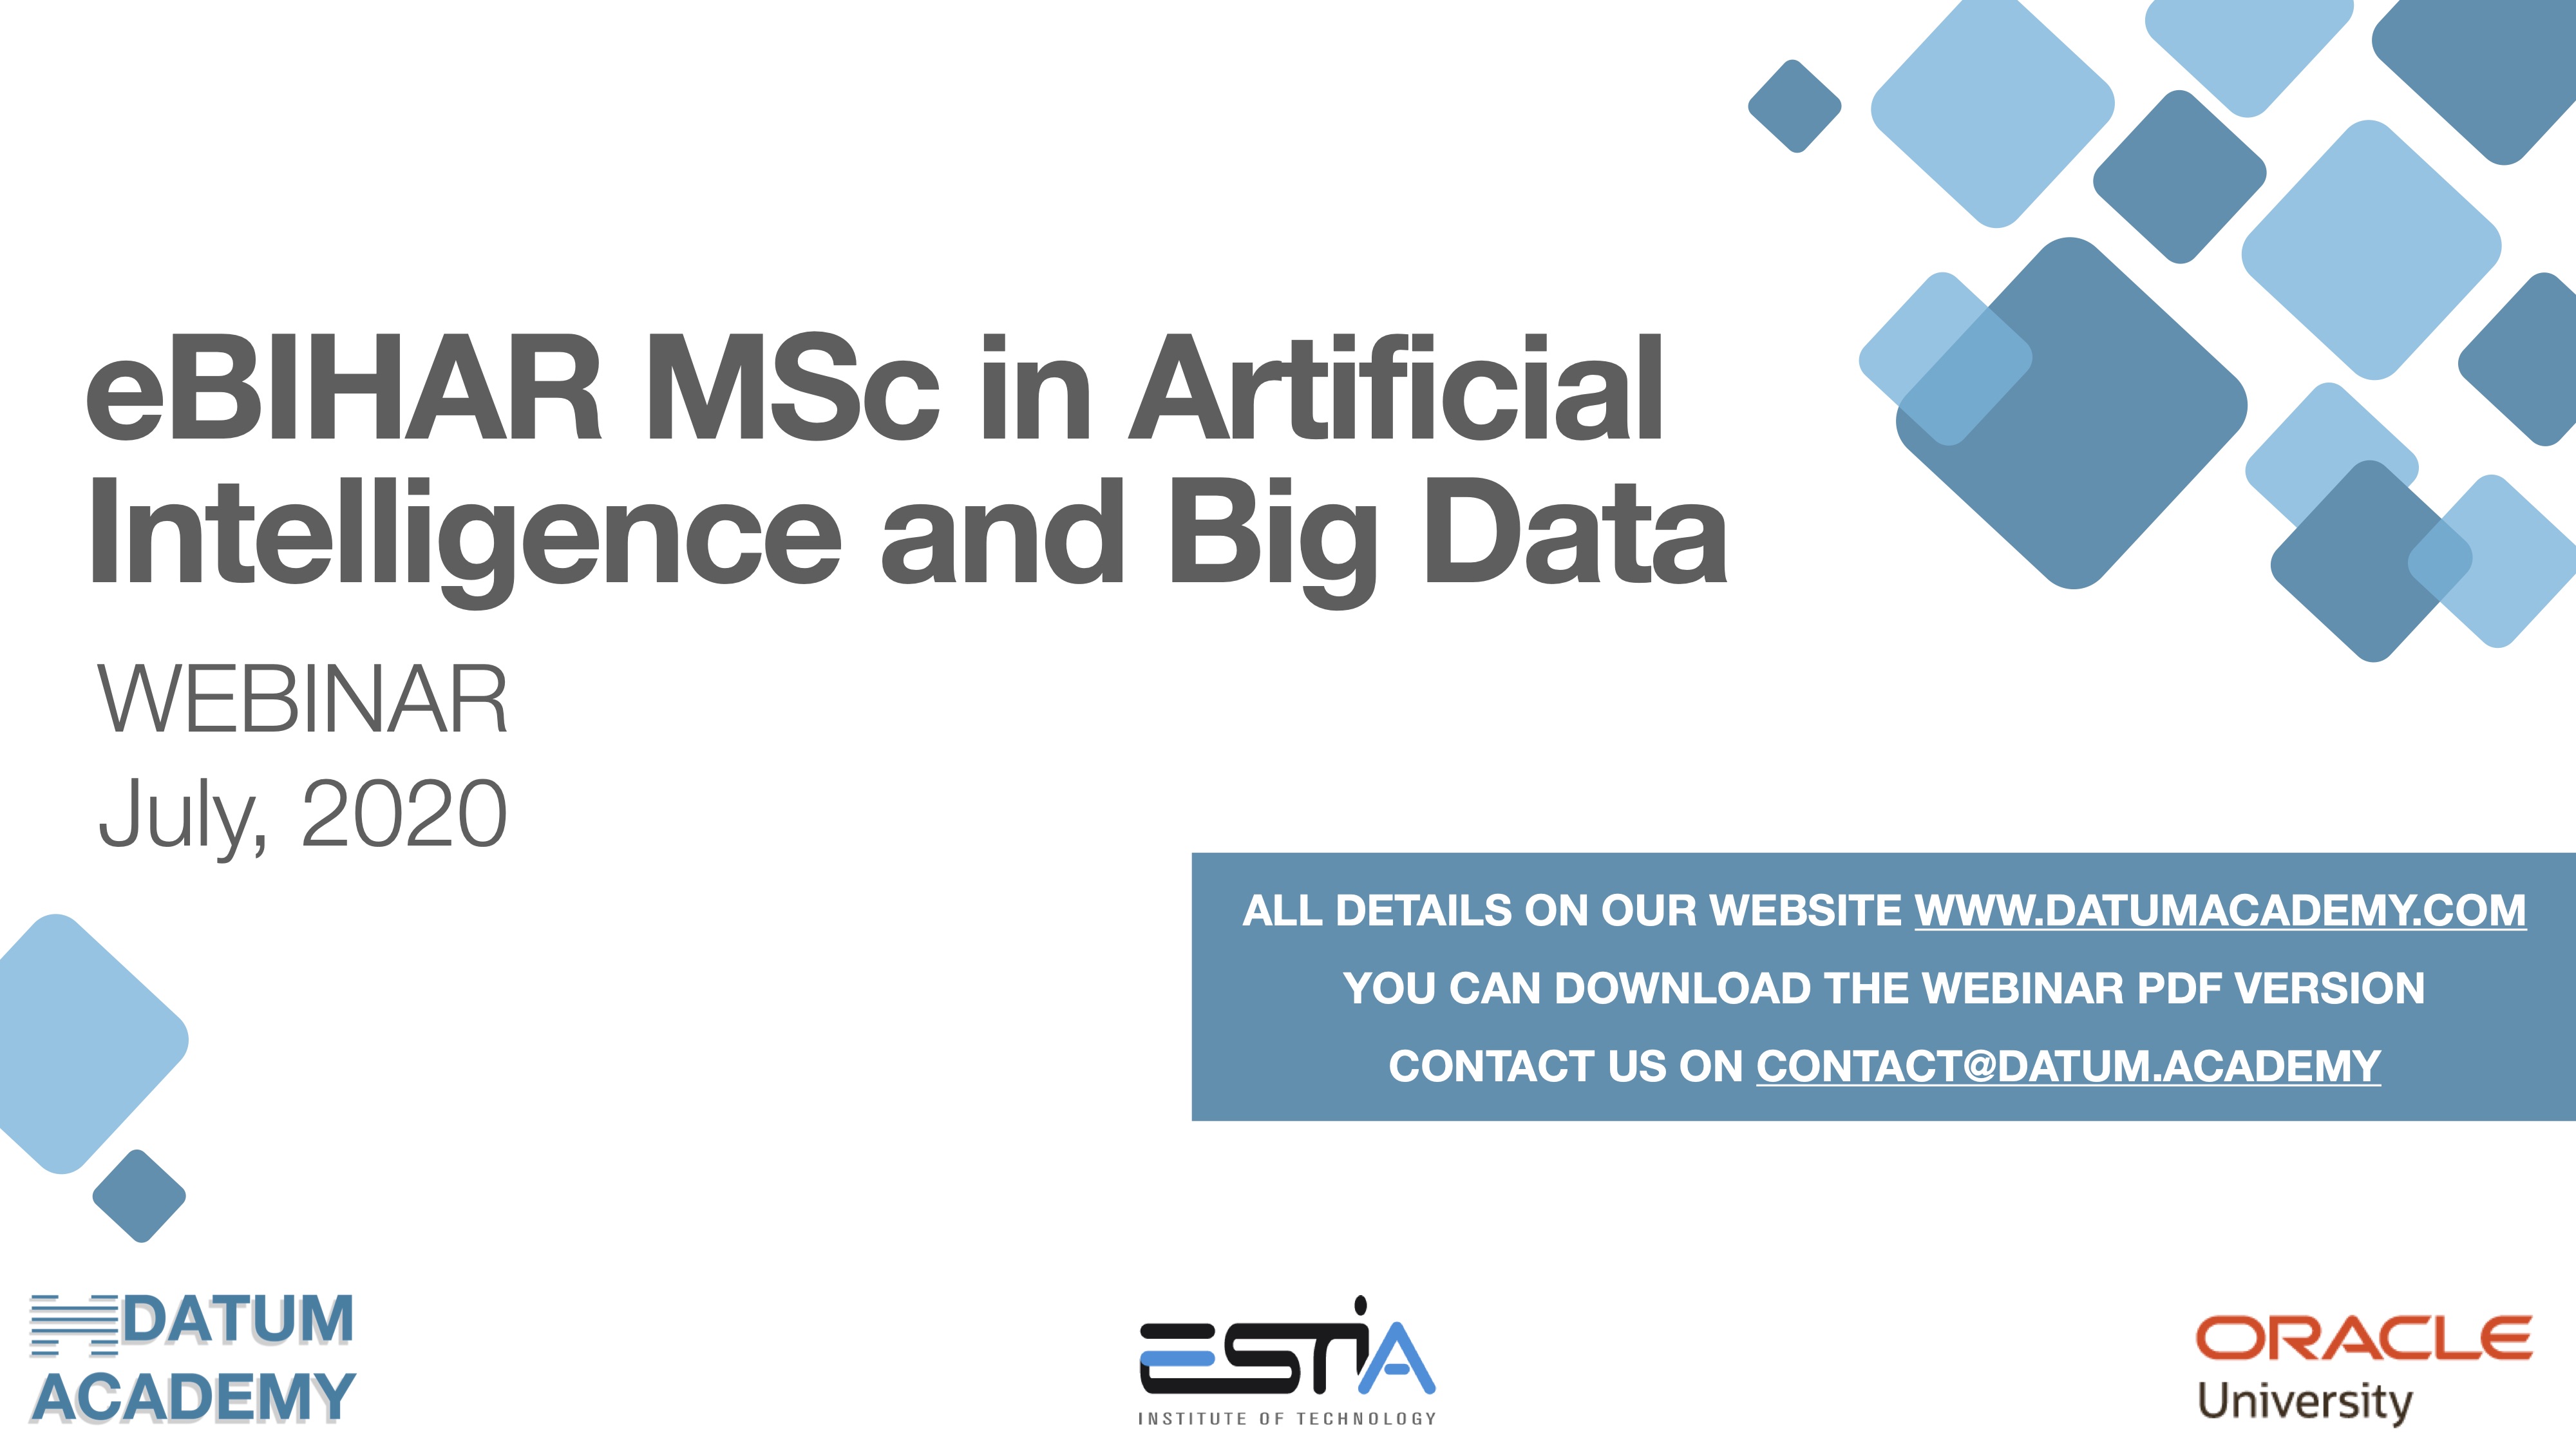 eBIHAR MSc in Artificial Intelligence and Big Data